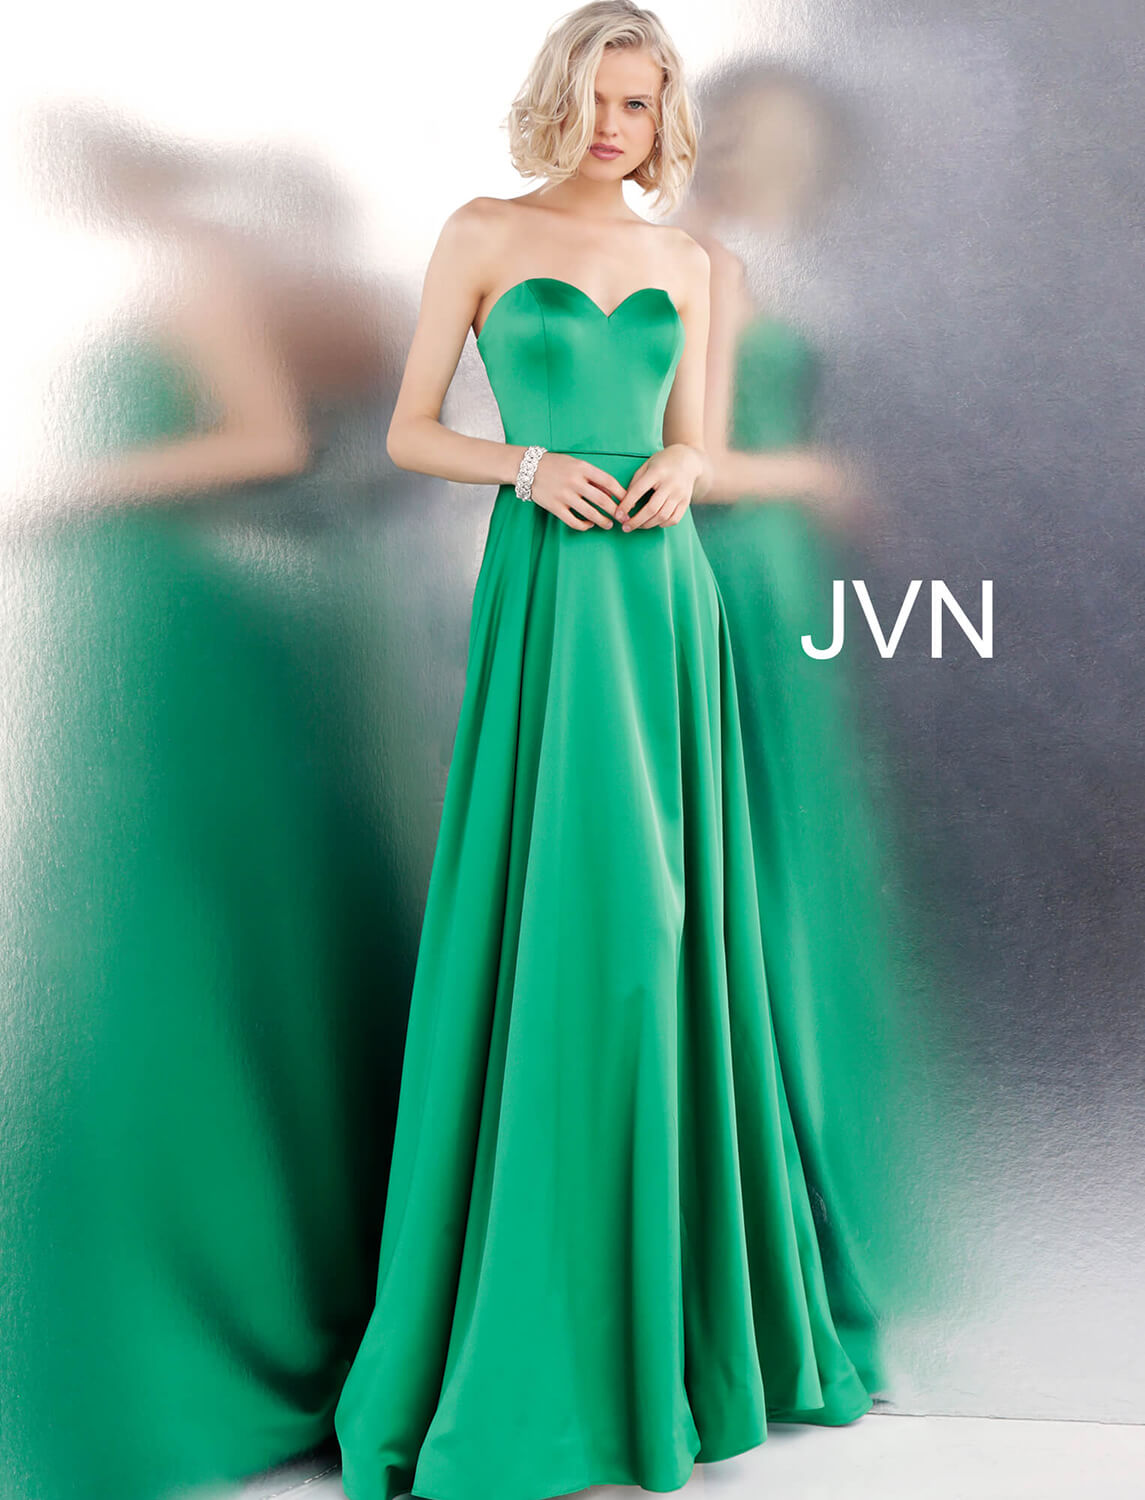 Buy > green strapless prom dress > in stock